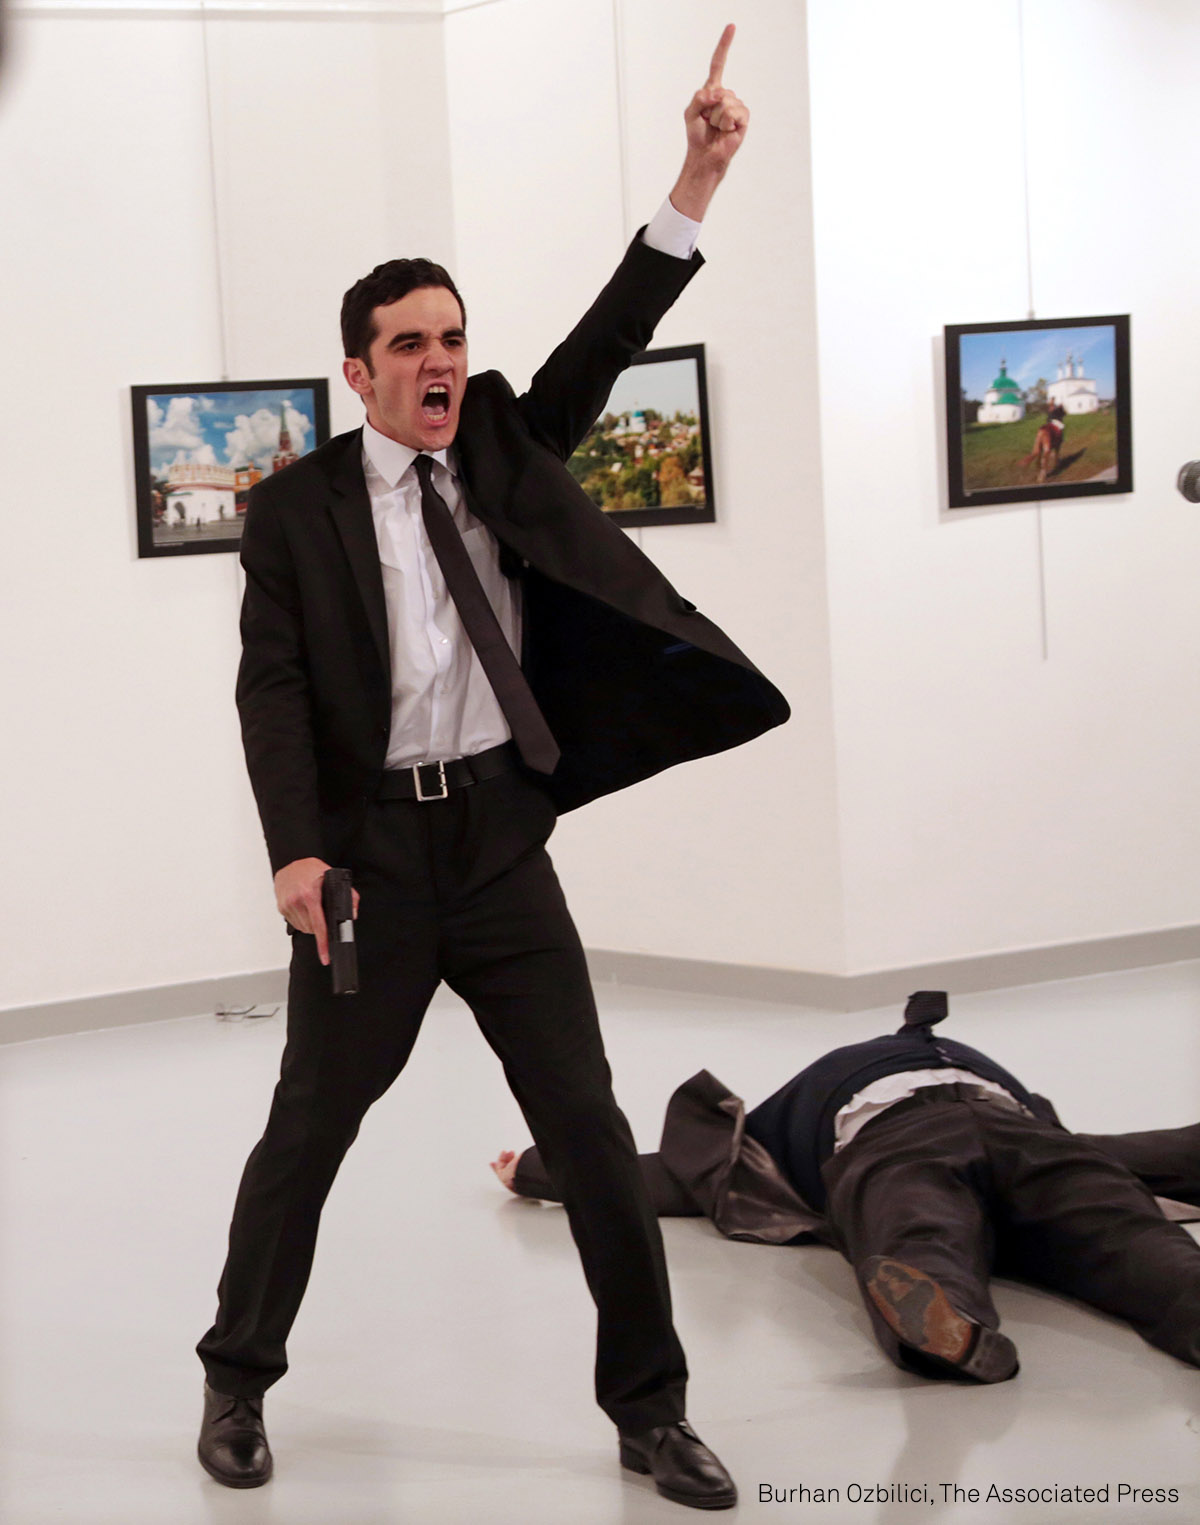 Mevlüt Mert Altıntaş shouts after shooting Andrey Karlov, the Russian ambassador to Turkey, at an art gallery in Ankara, Turkey.